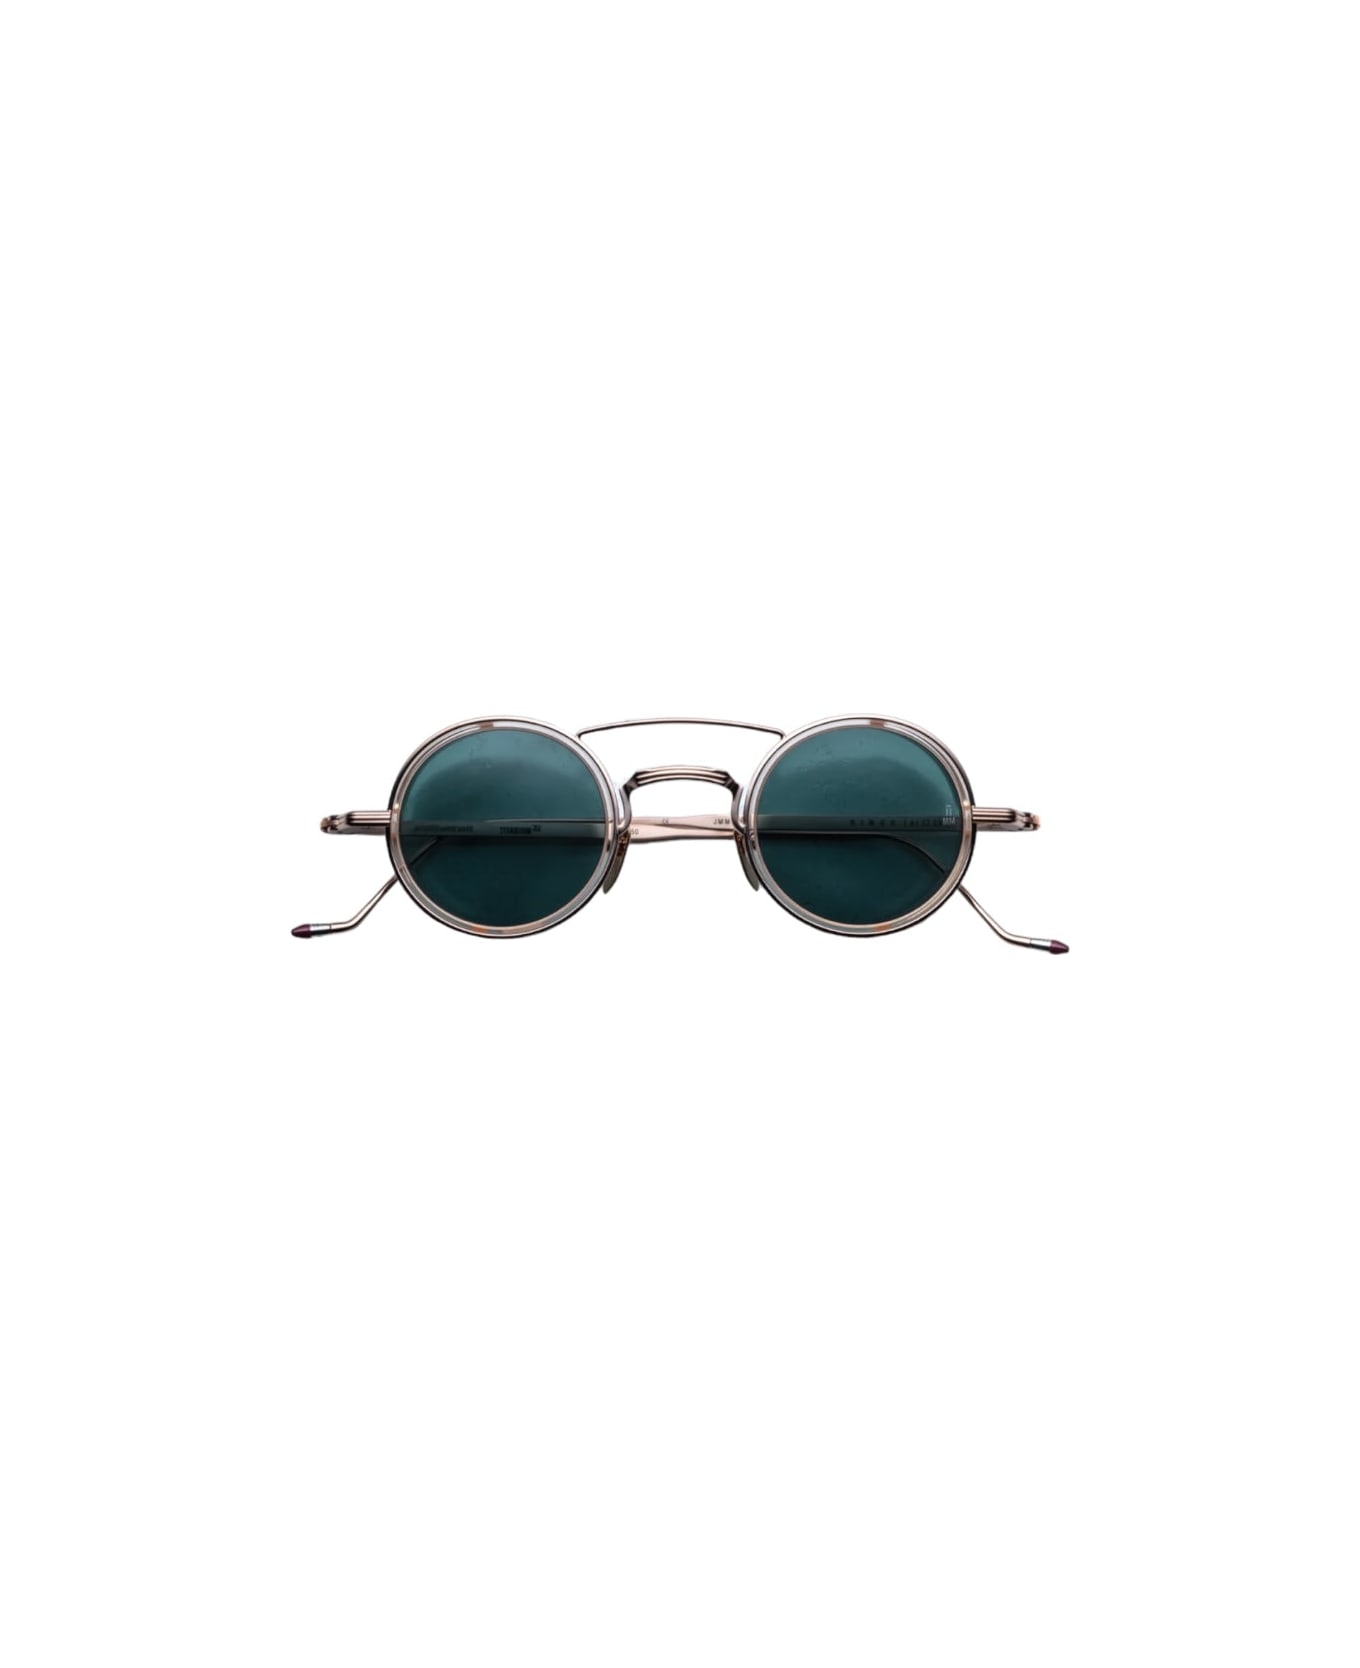 Jacques Marie Mage Ringo - Dahlia Sunglasses サングラス